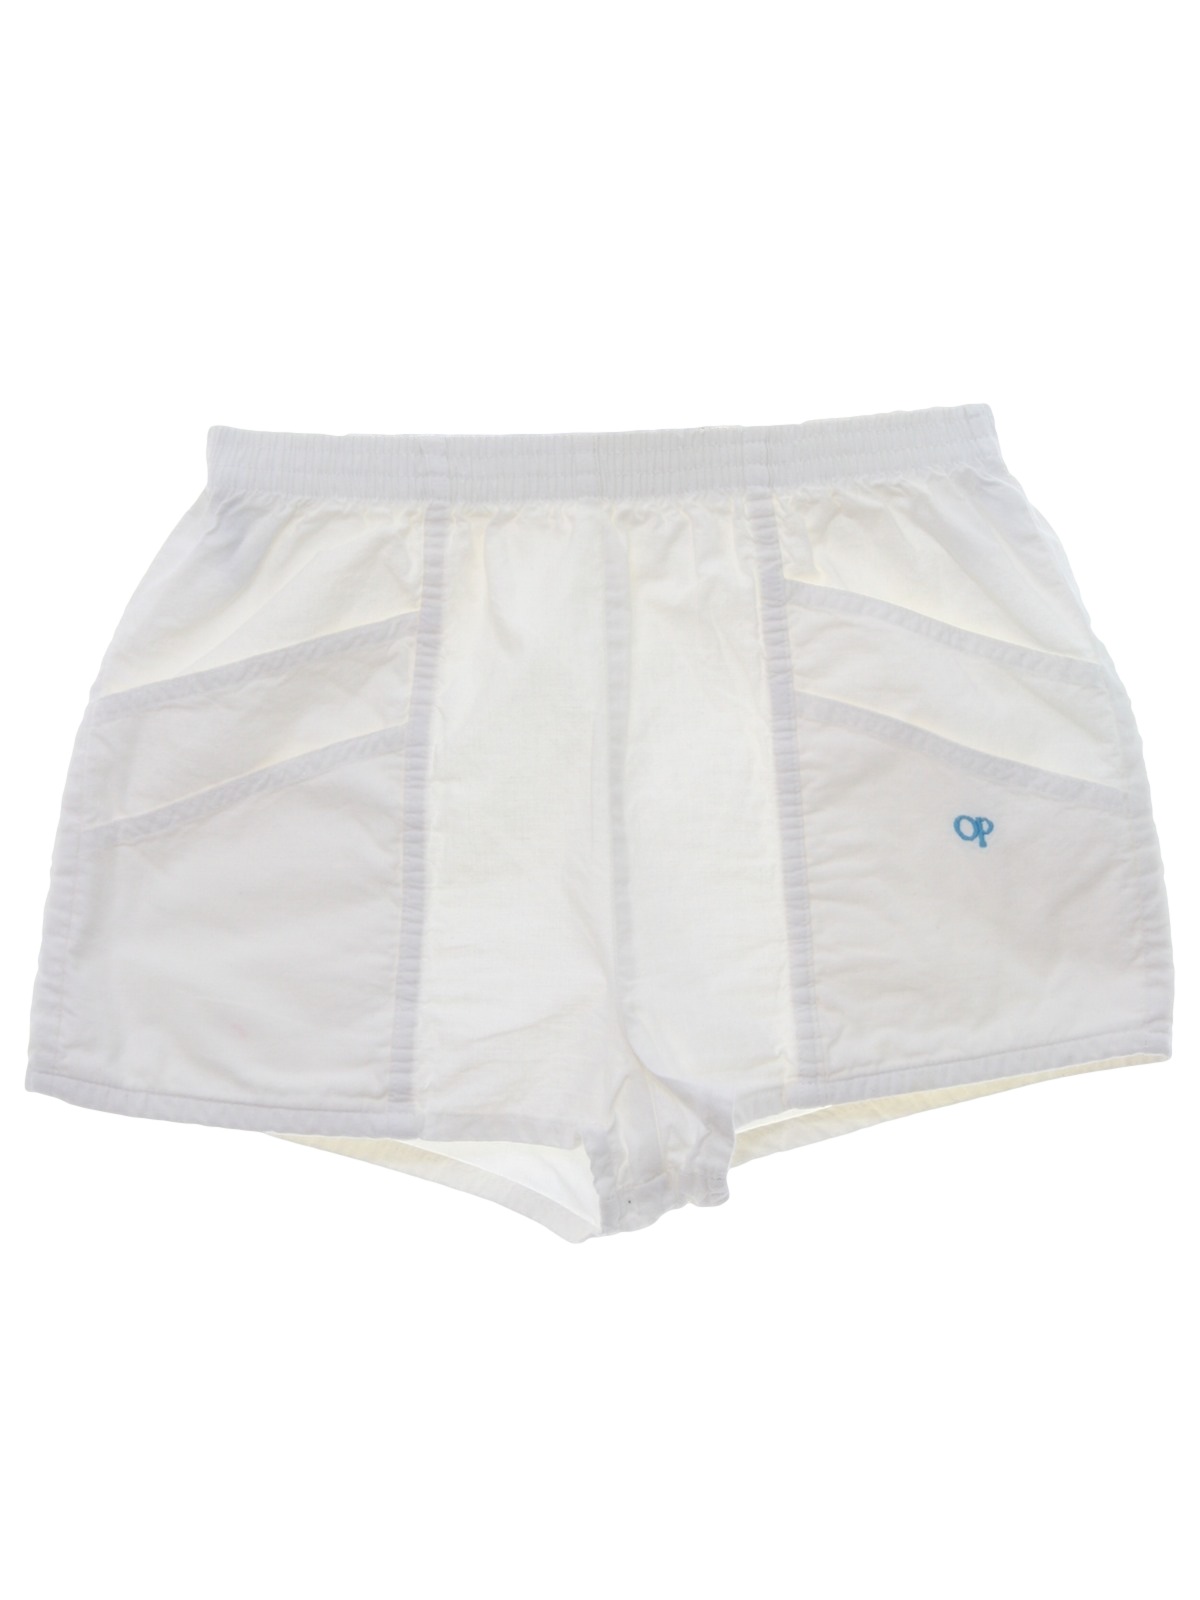 80's Ocean Pacific OP Shorts: 80s -Ocean Pacific OP- Womens white ...